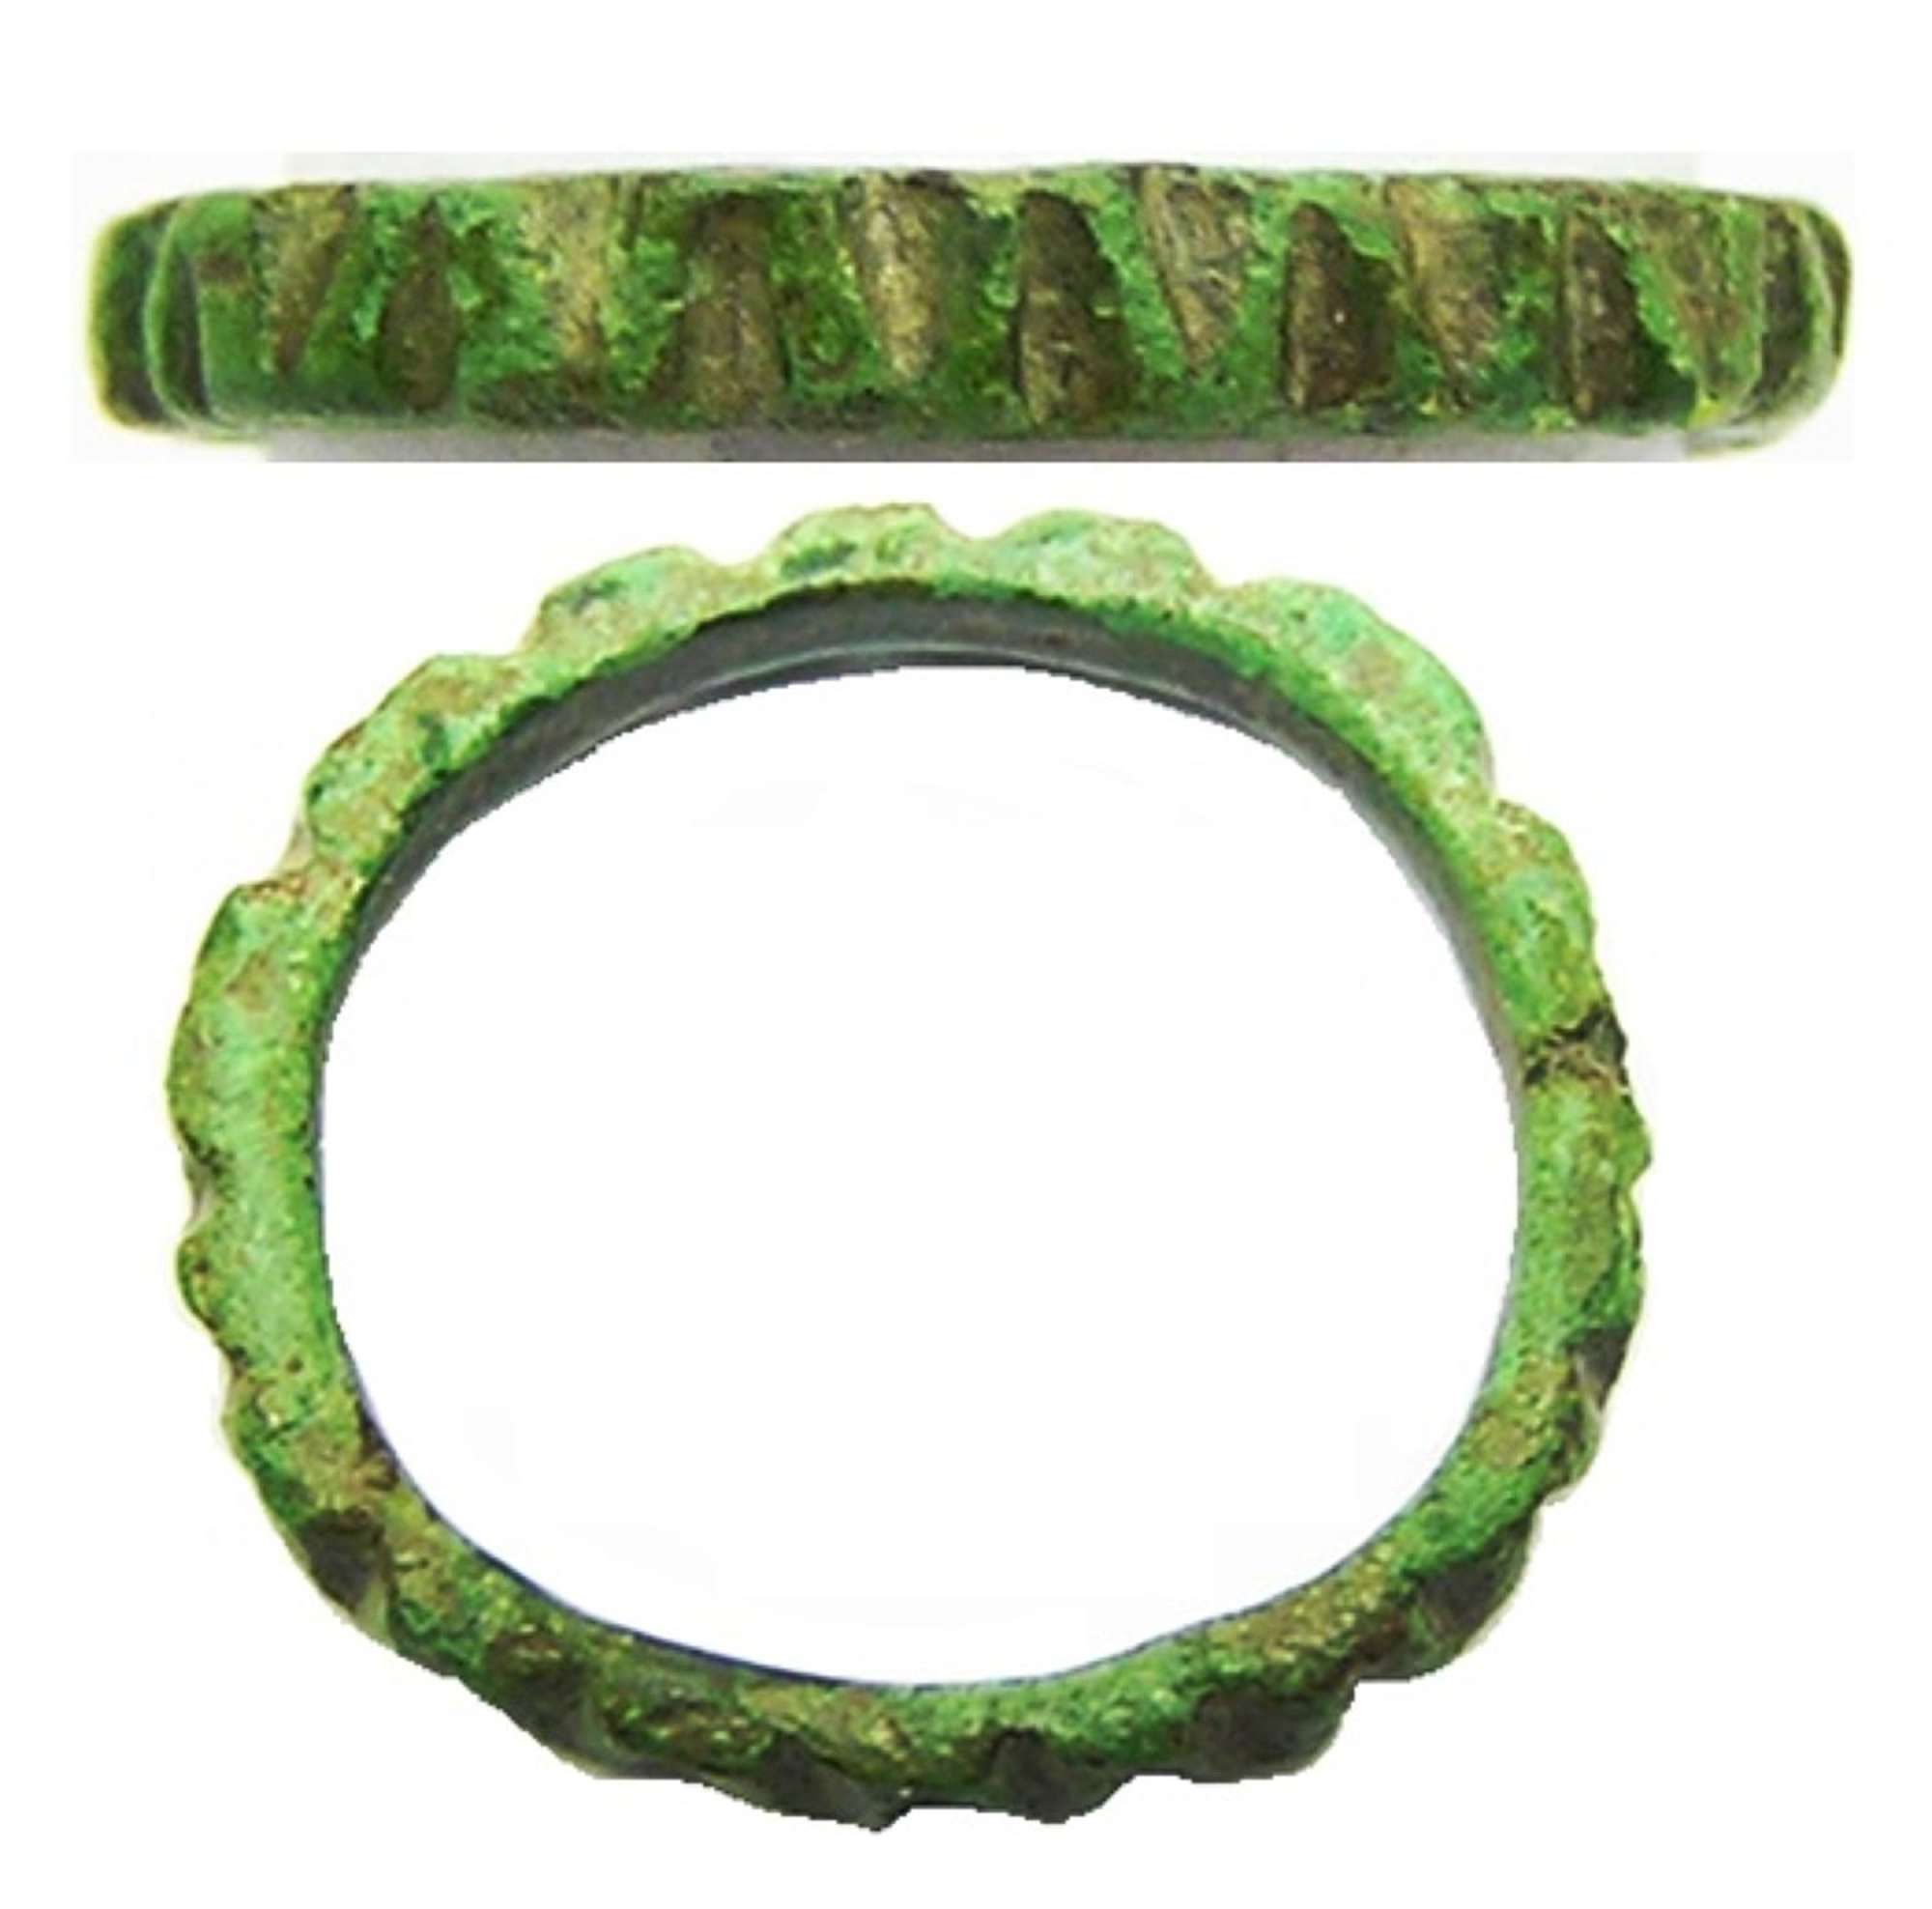 Ancient Roman bronze finger ring 'angular wave' design